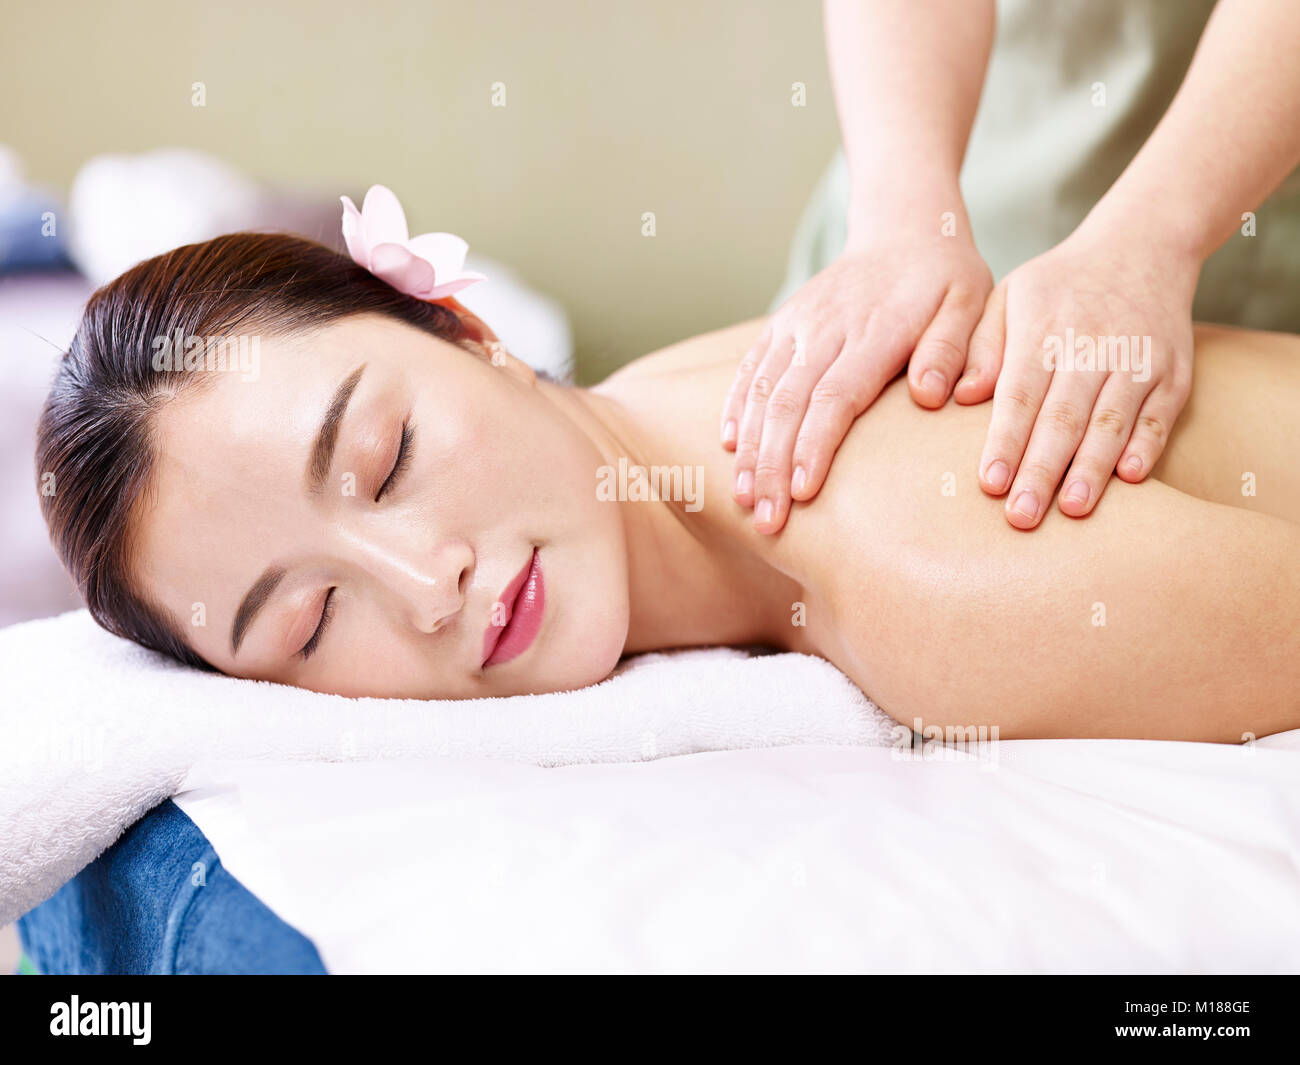 japanis gir massage